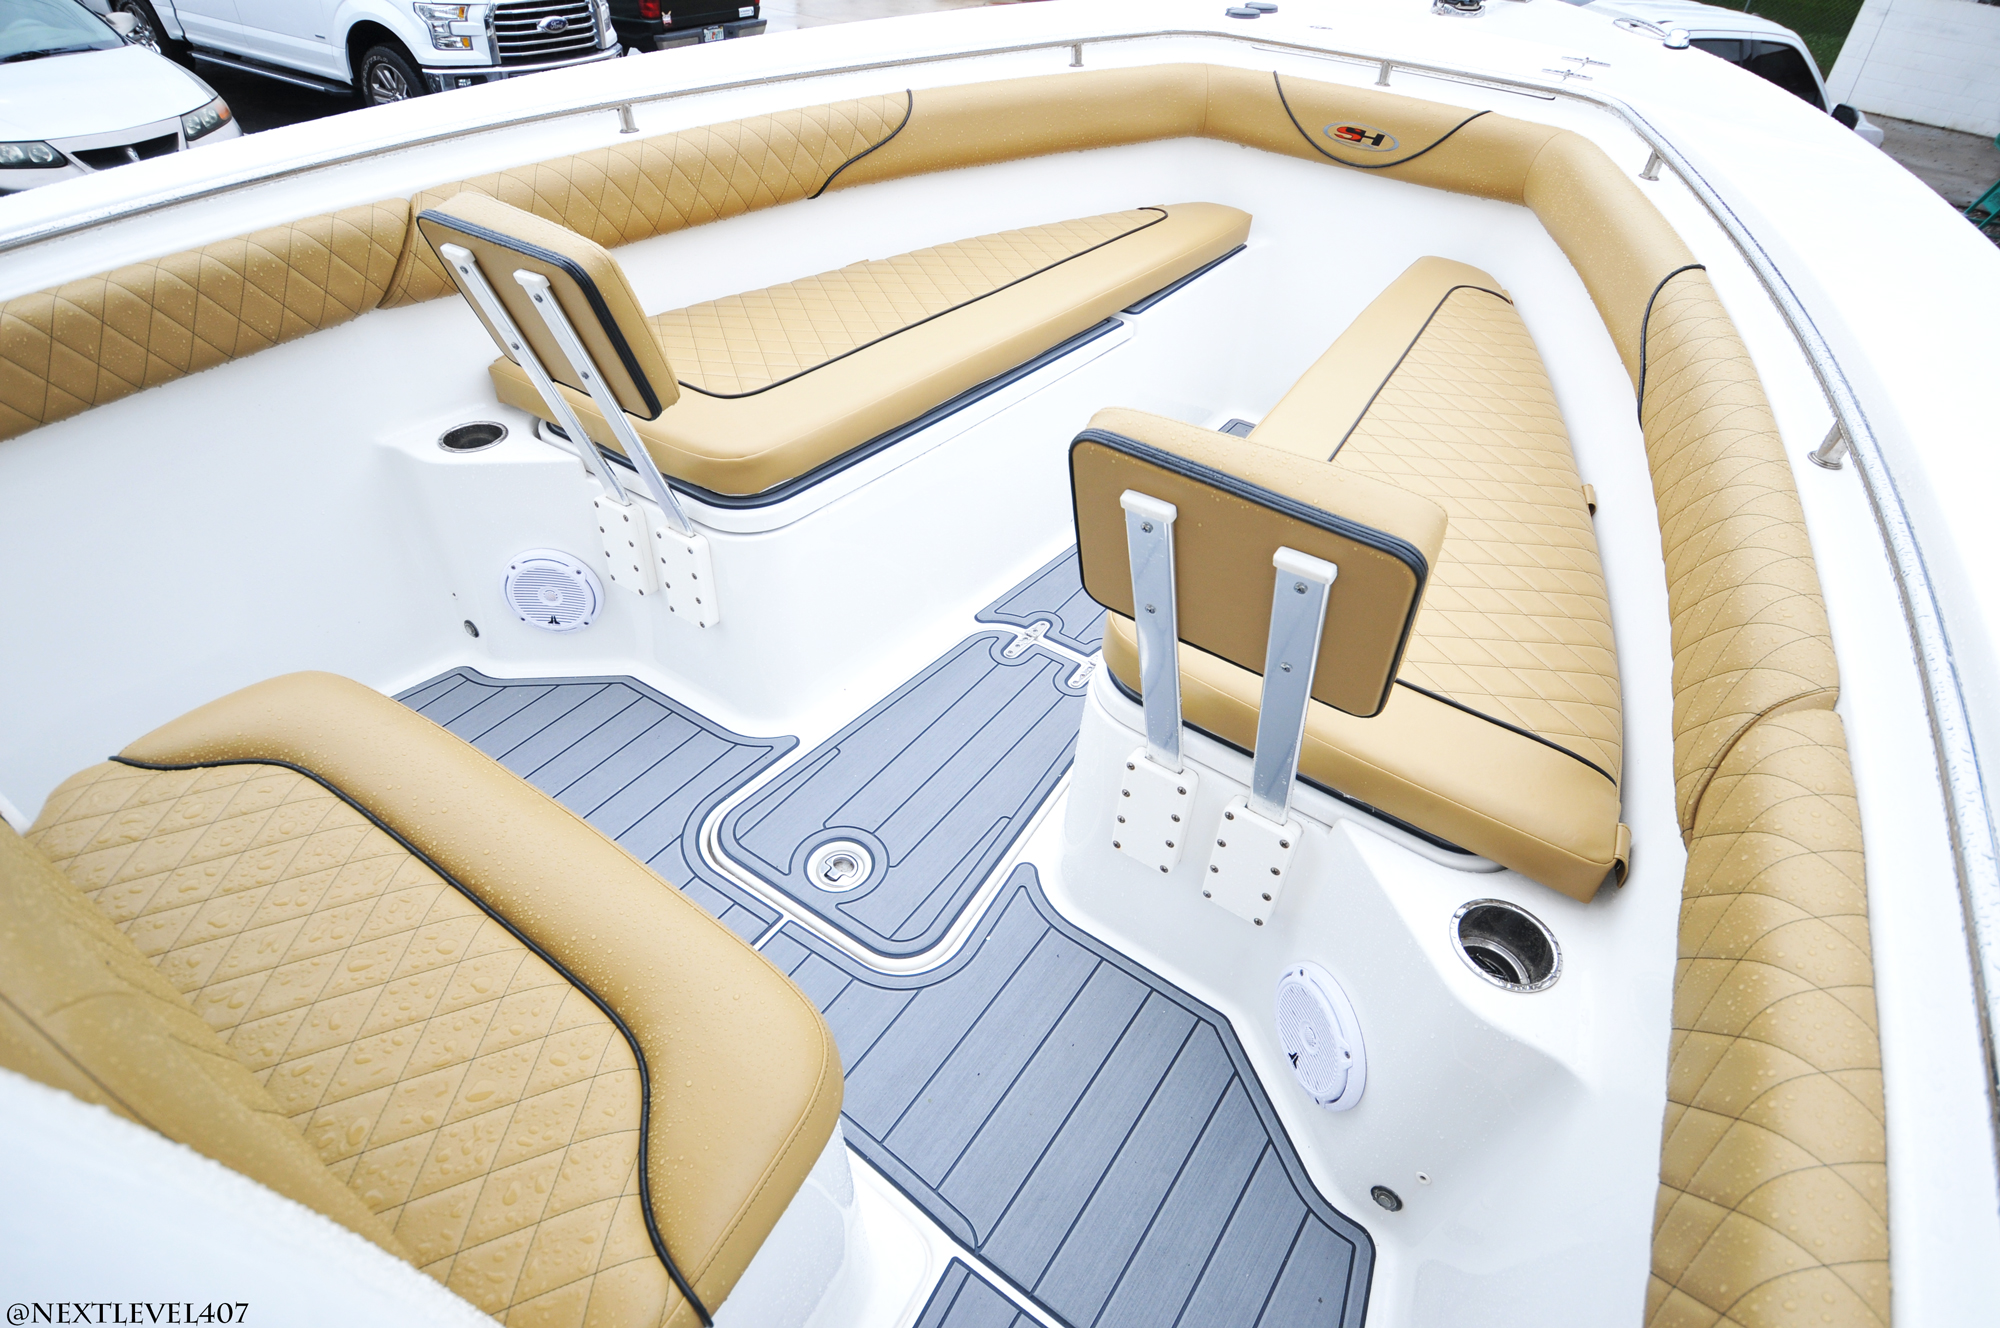 https://floridamarinecustoms.com/wp-content/uploads/2020/11/Next-Level-Custom-Boat-Floor-SeaDek-and-Seats-Upholstery-LG.jpg